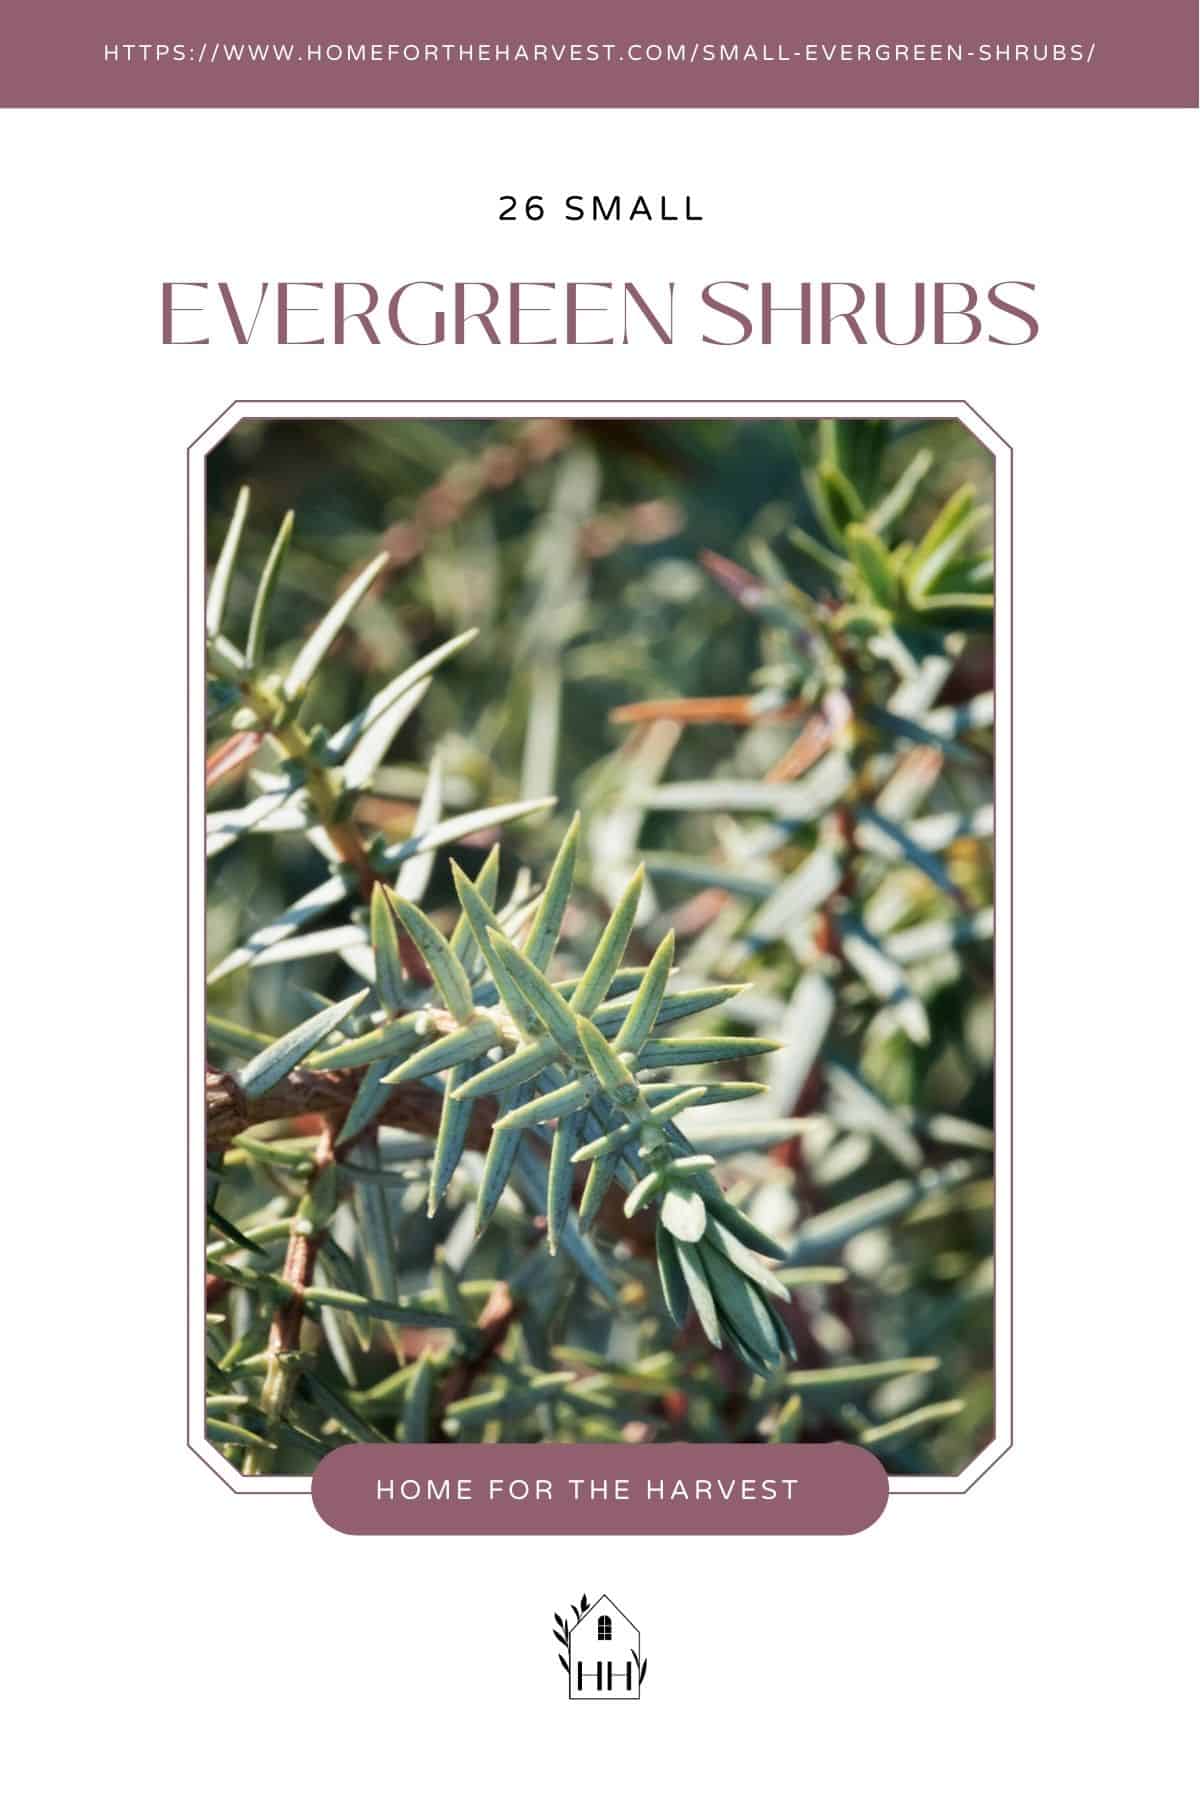 26 small evergreen shrubs to consider - pinterest via @home4theharvest